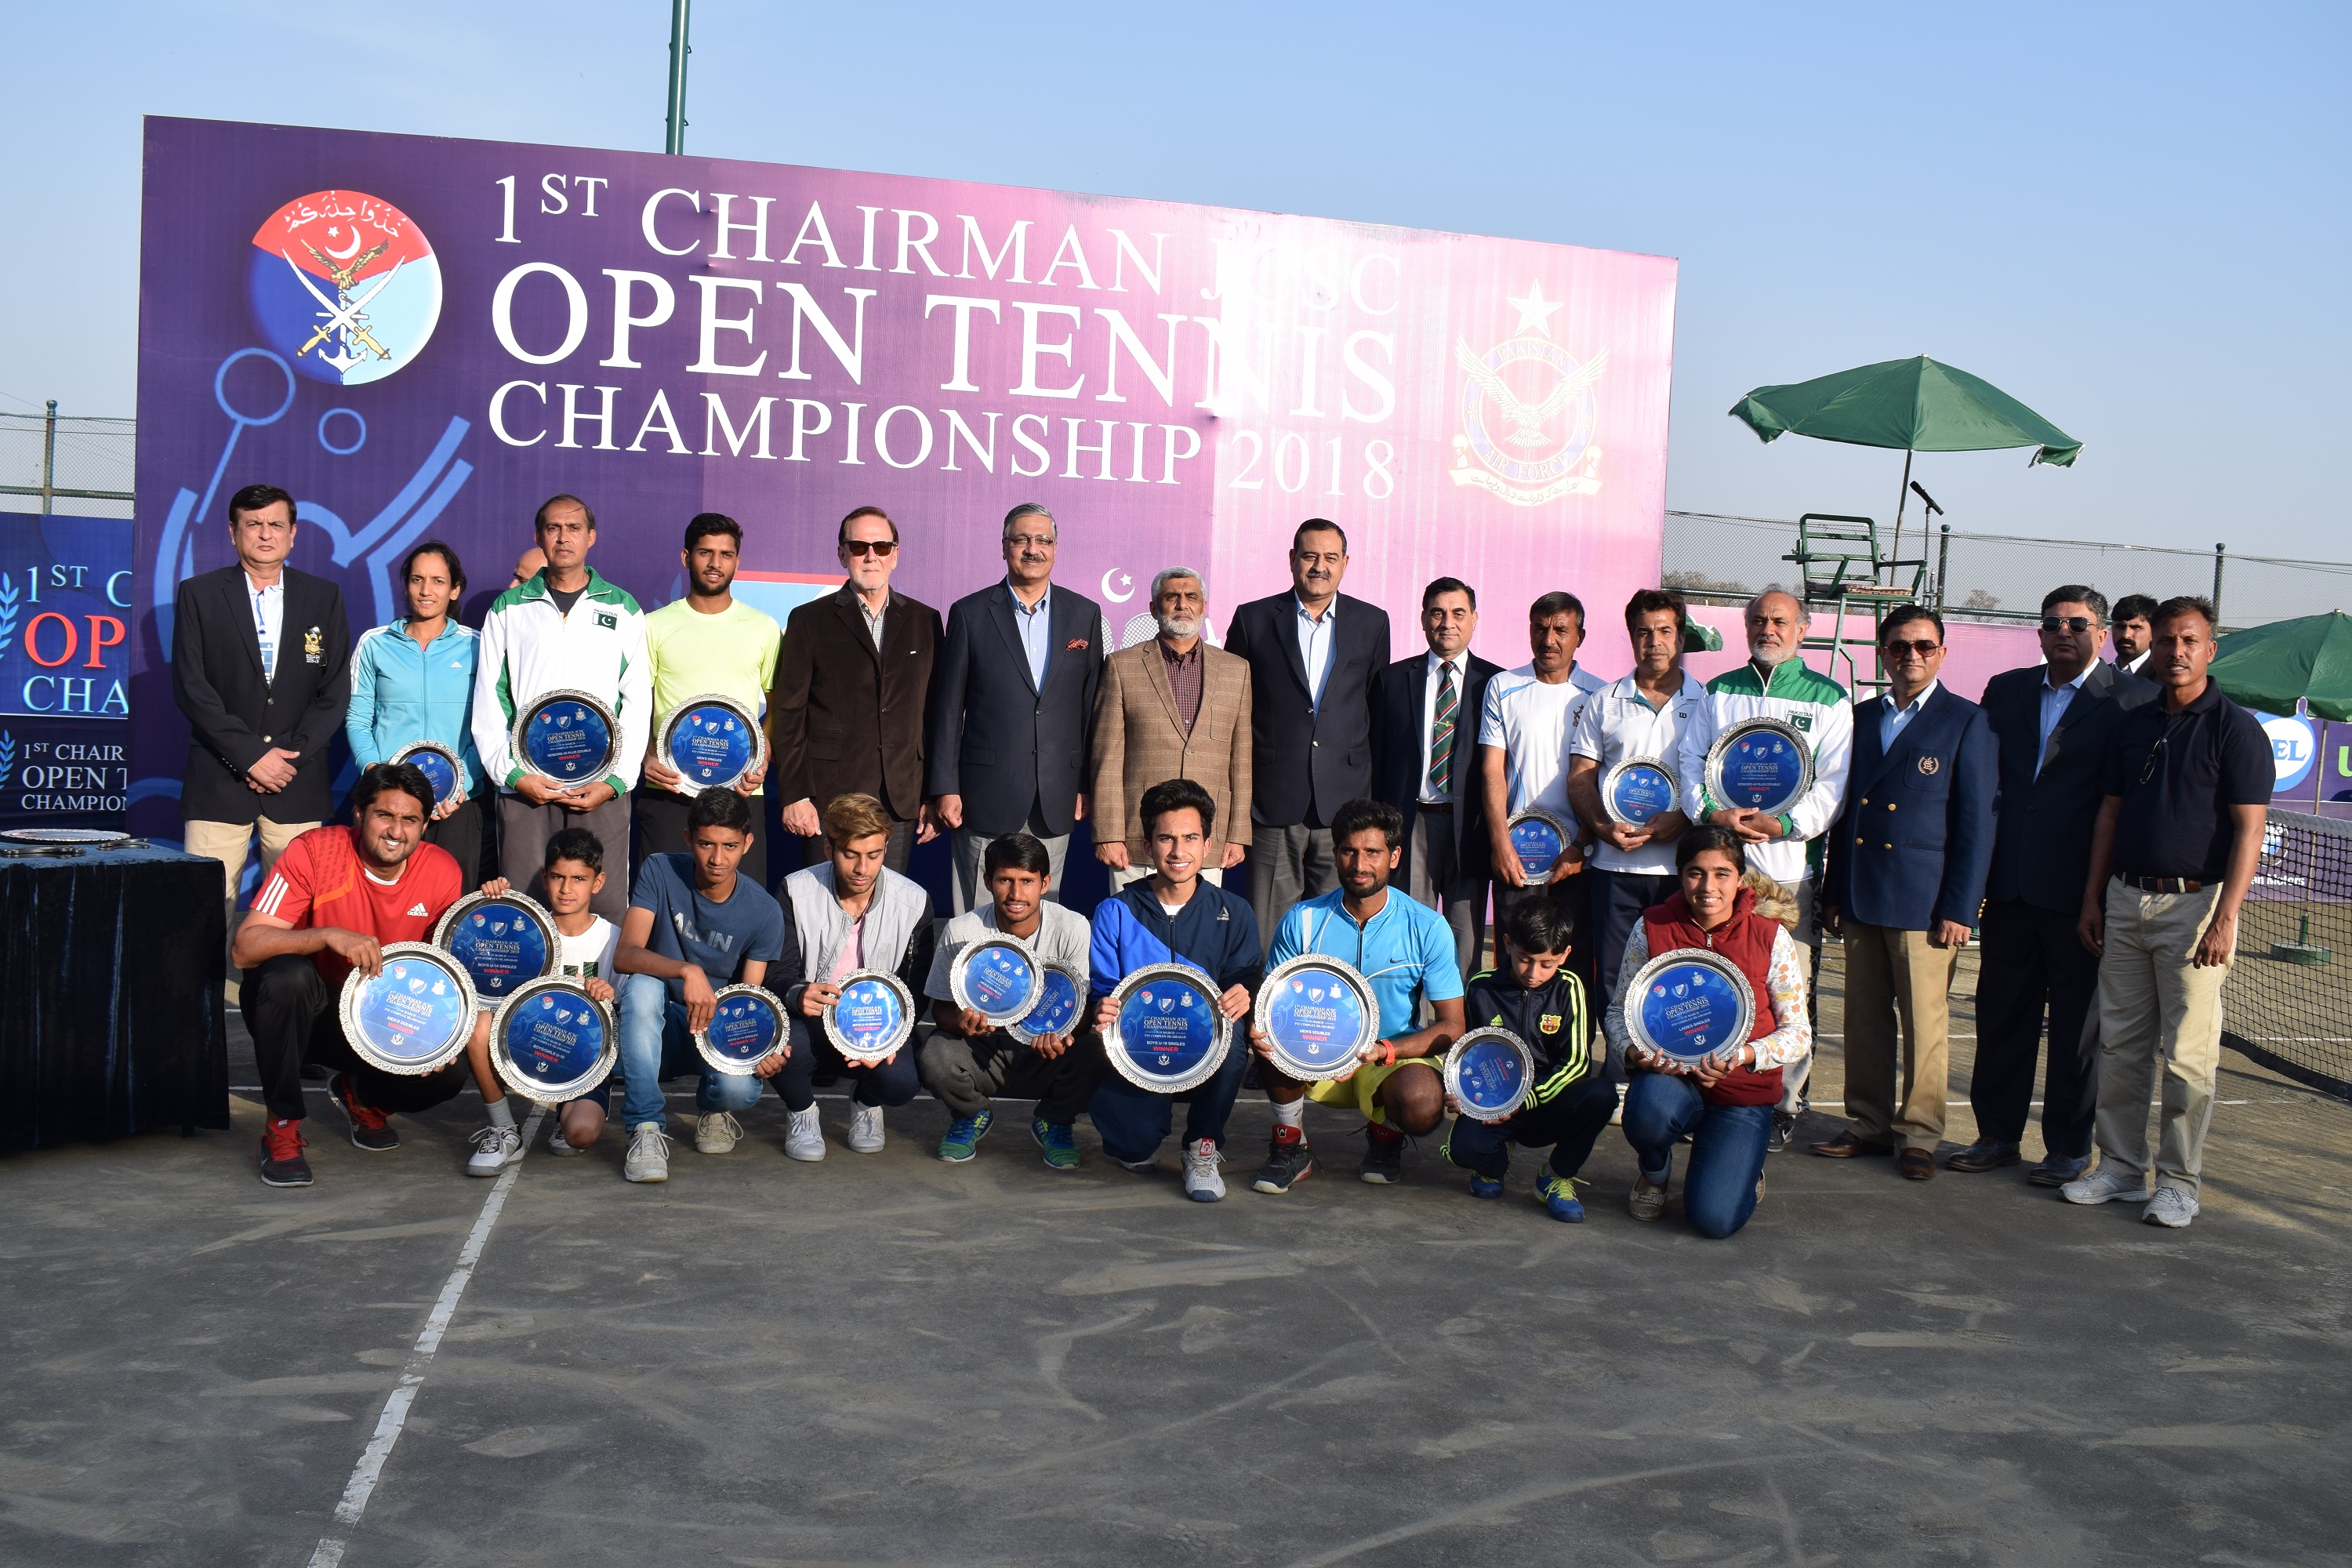 1st Chairman JCSC Open Tennis Championship 2018